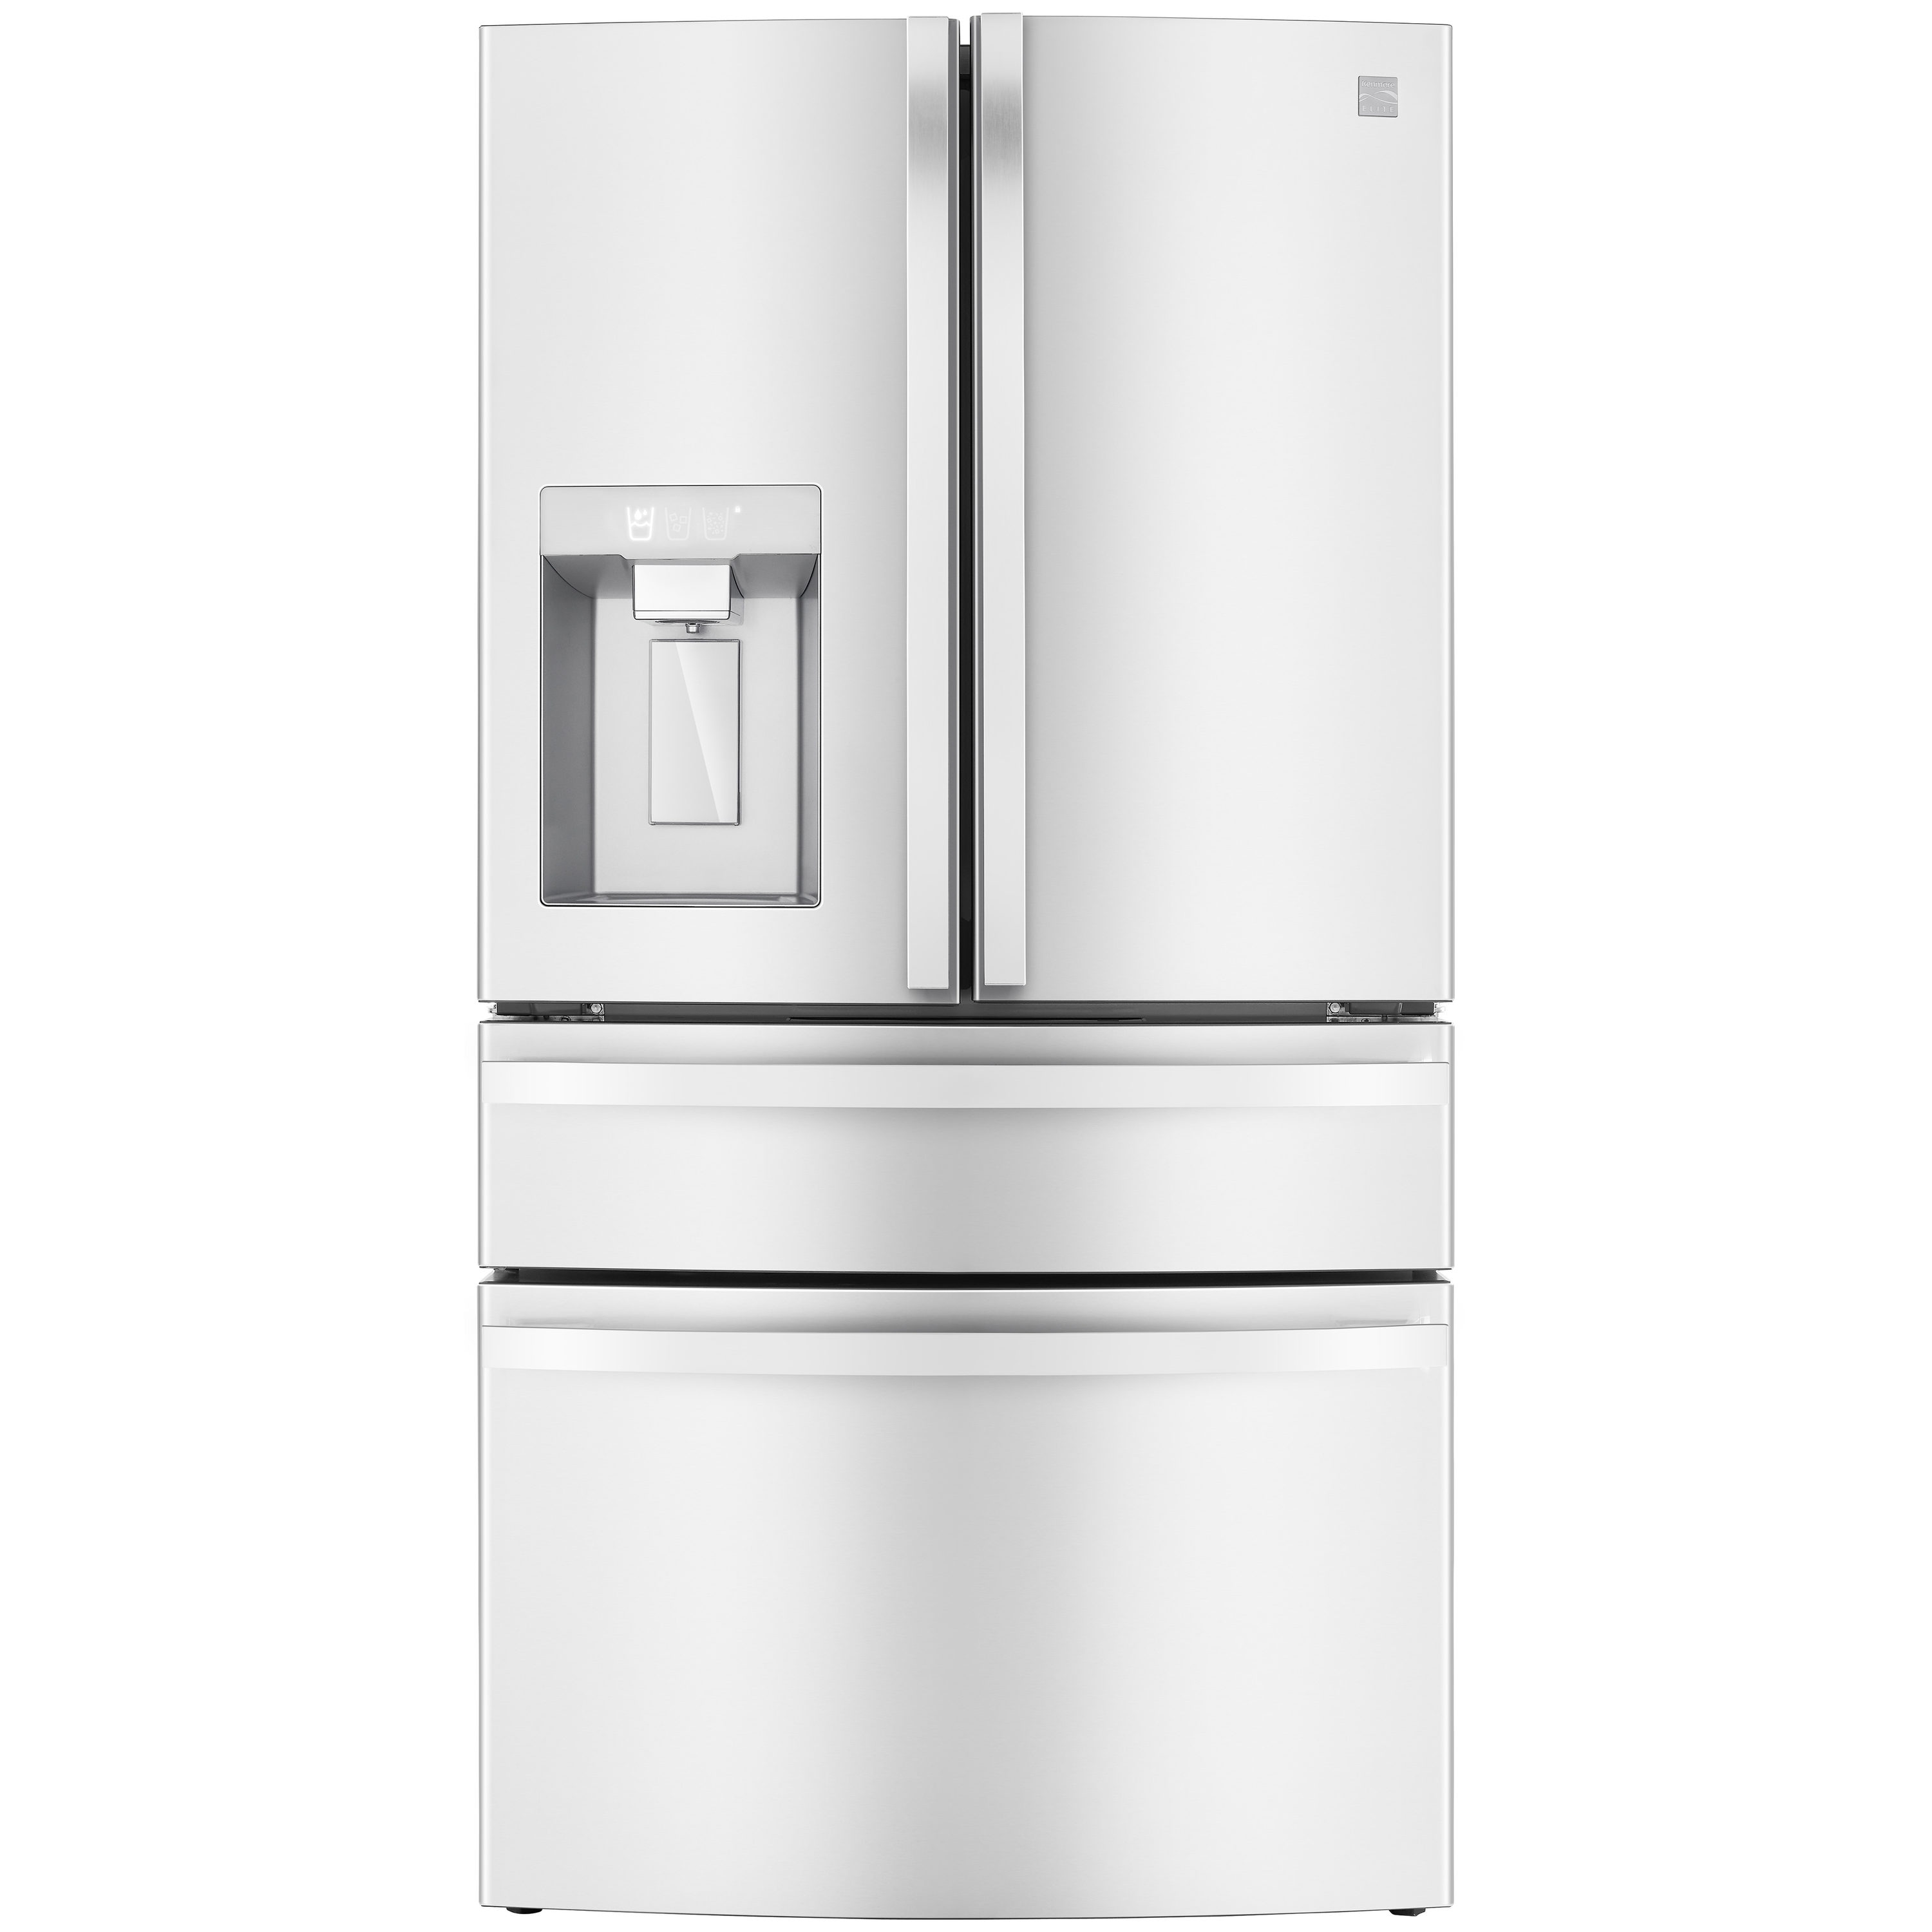 Kenmore Elite Refrigerators At Lowes Com